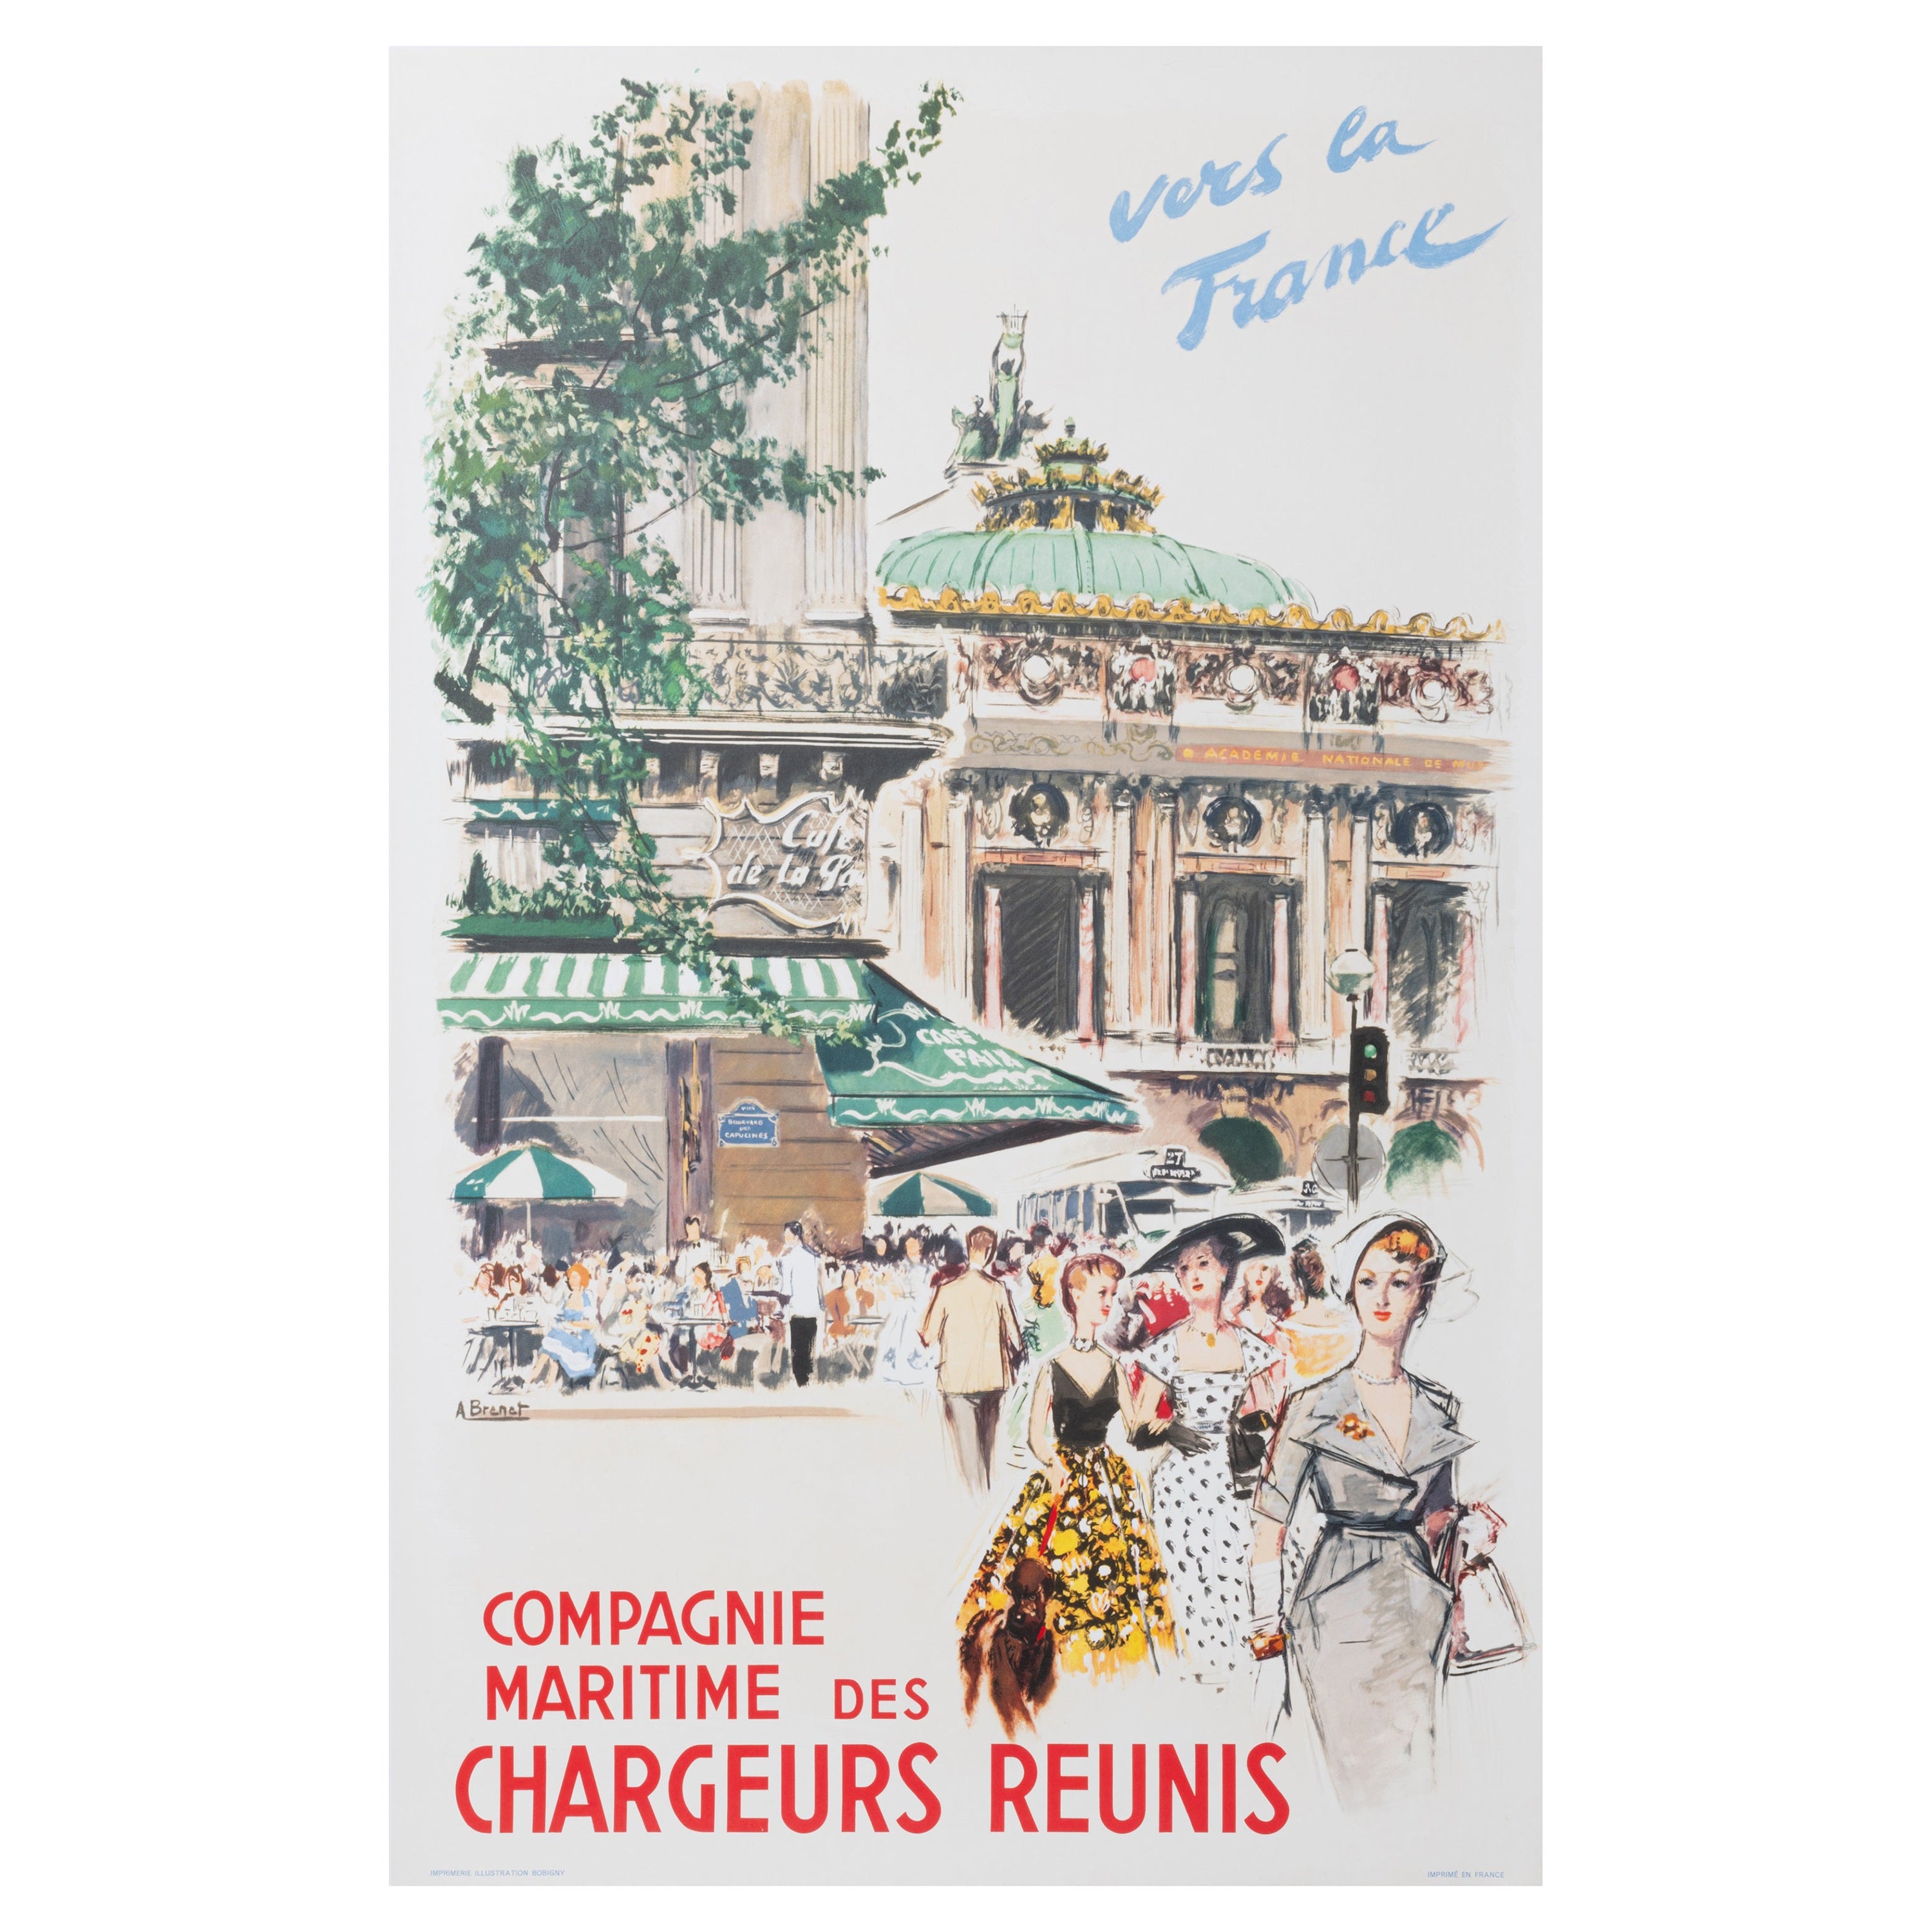 Brenet, Original Boat Poster, Paris Cafe Paix Opera Garnier, Chargeur Reuni 1950 For Sale